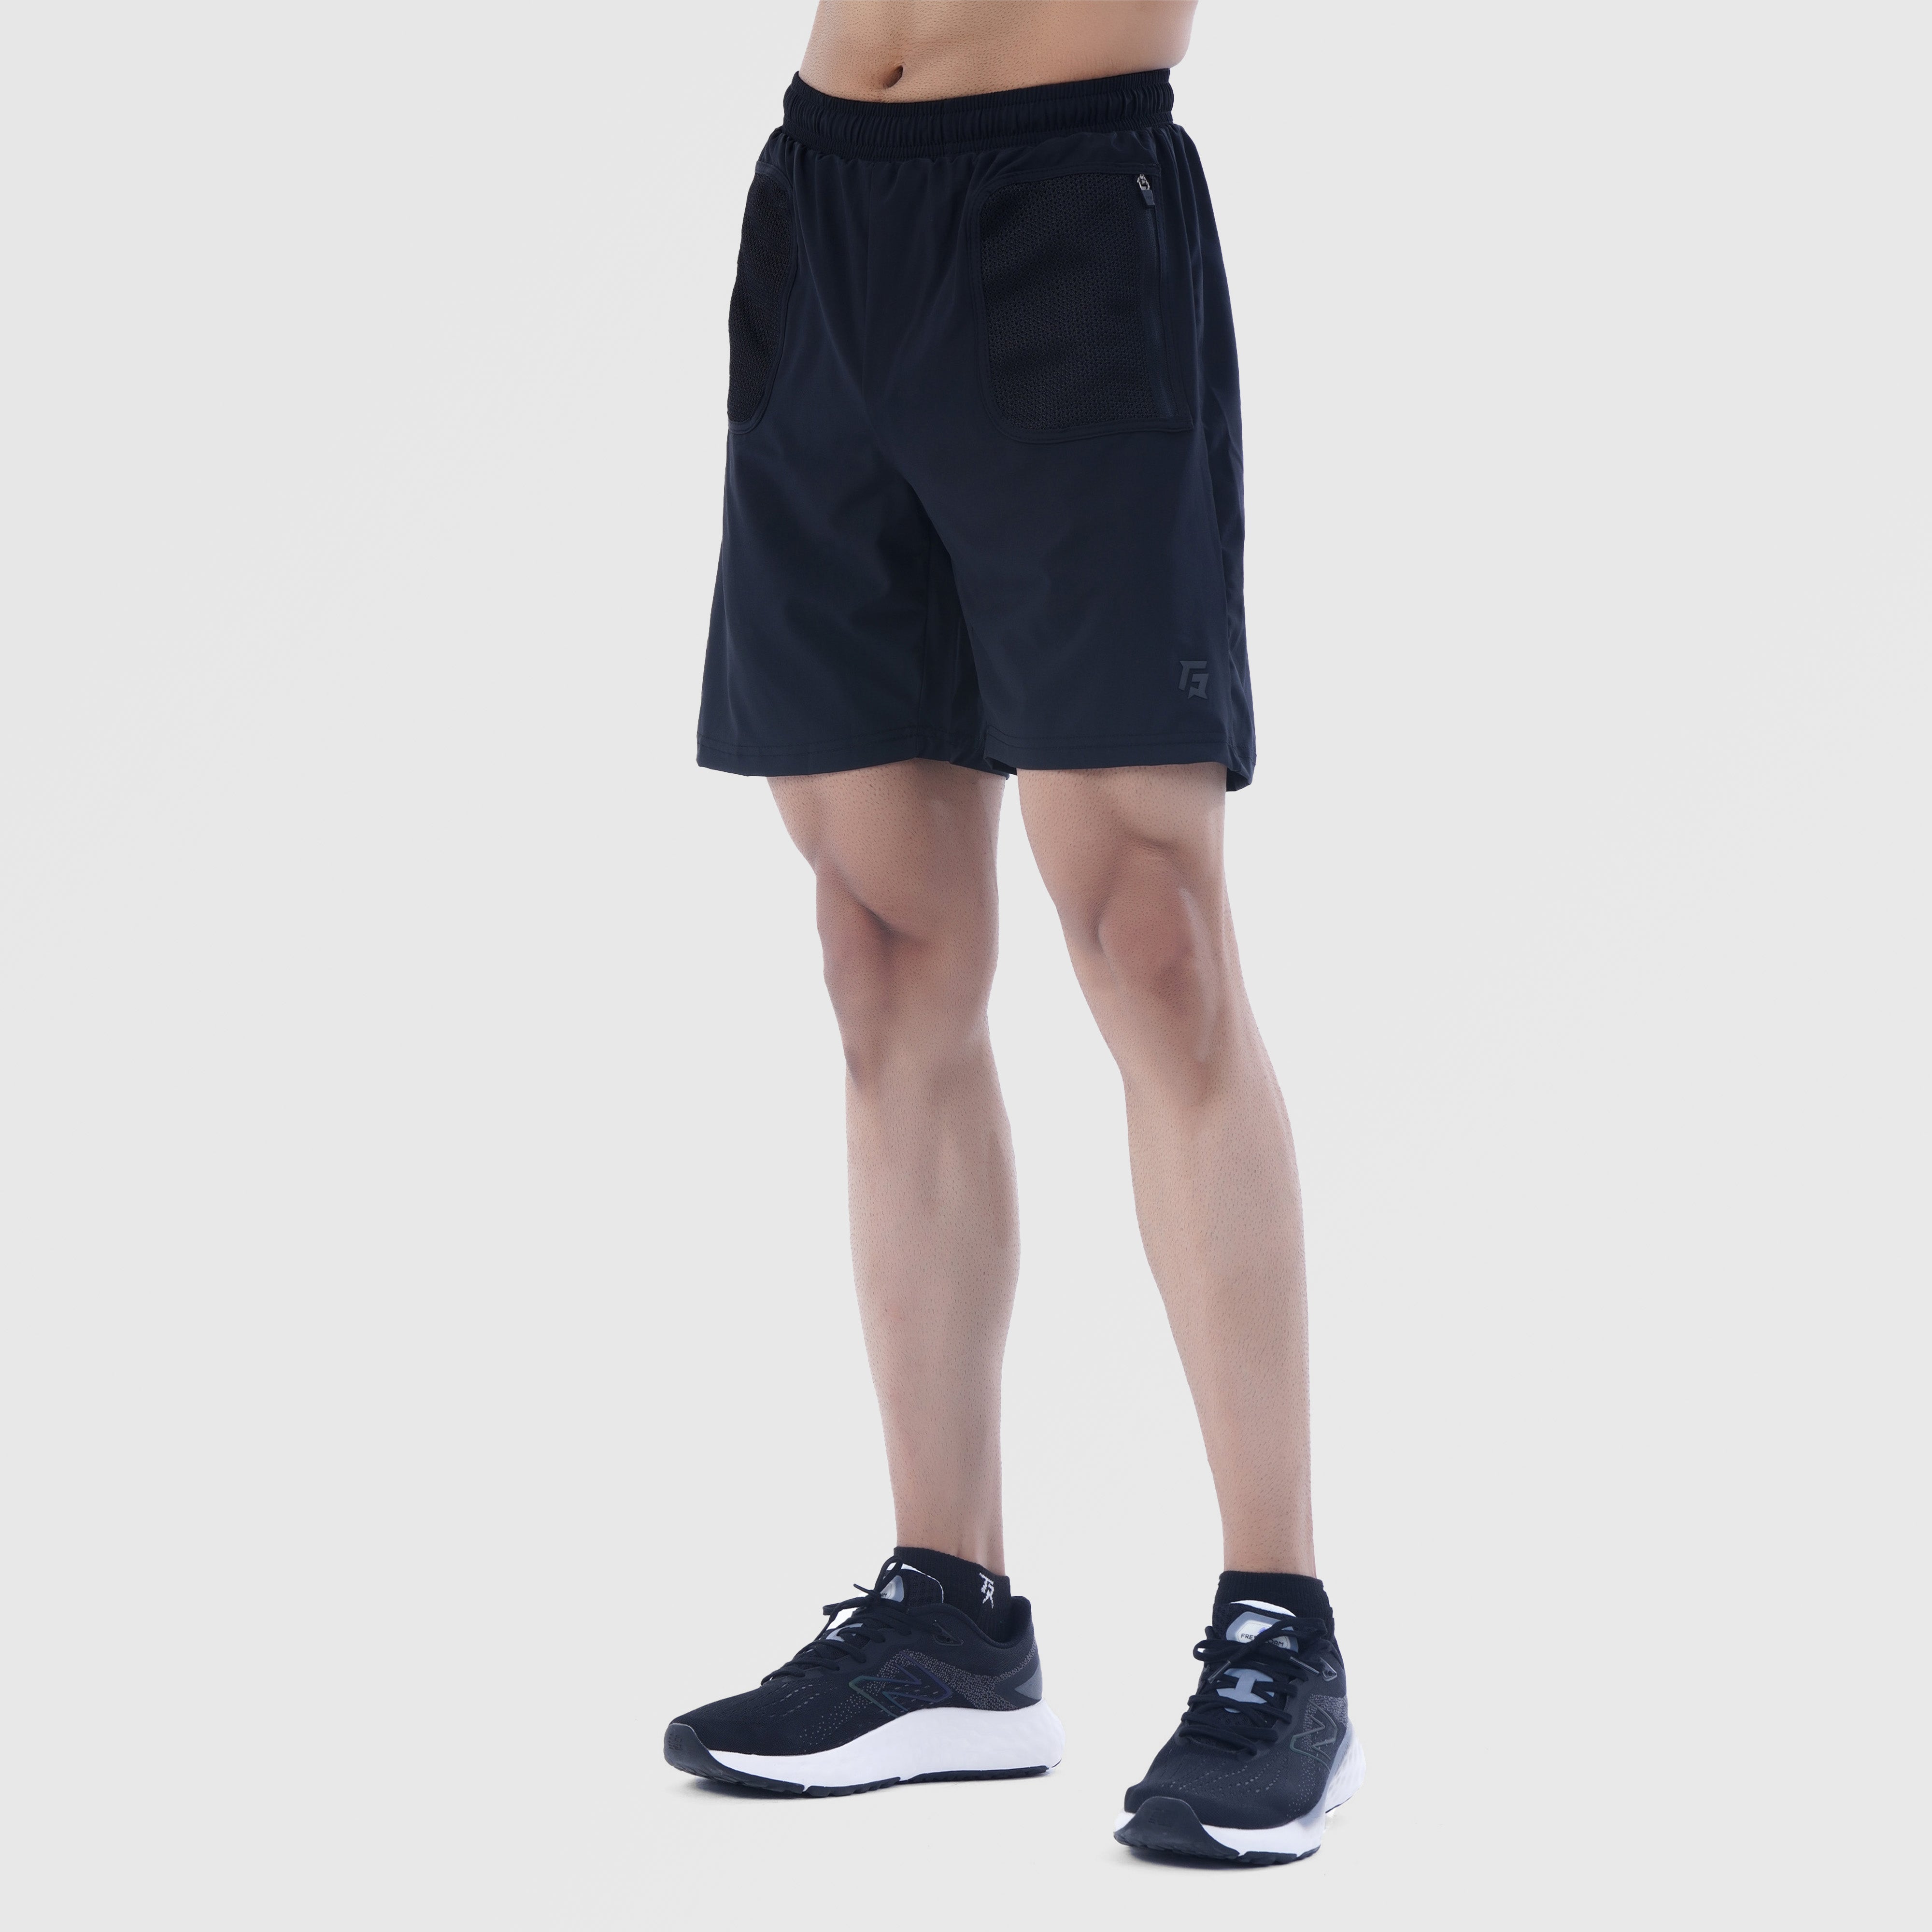 Performa Fit Shorts (Black)